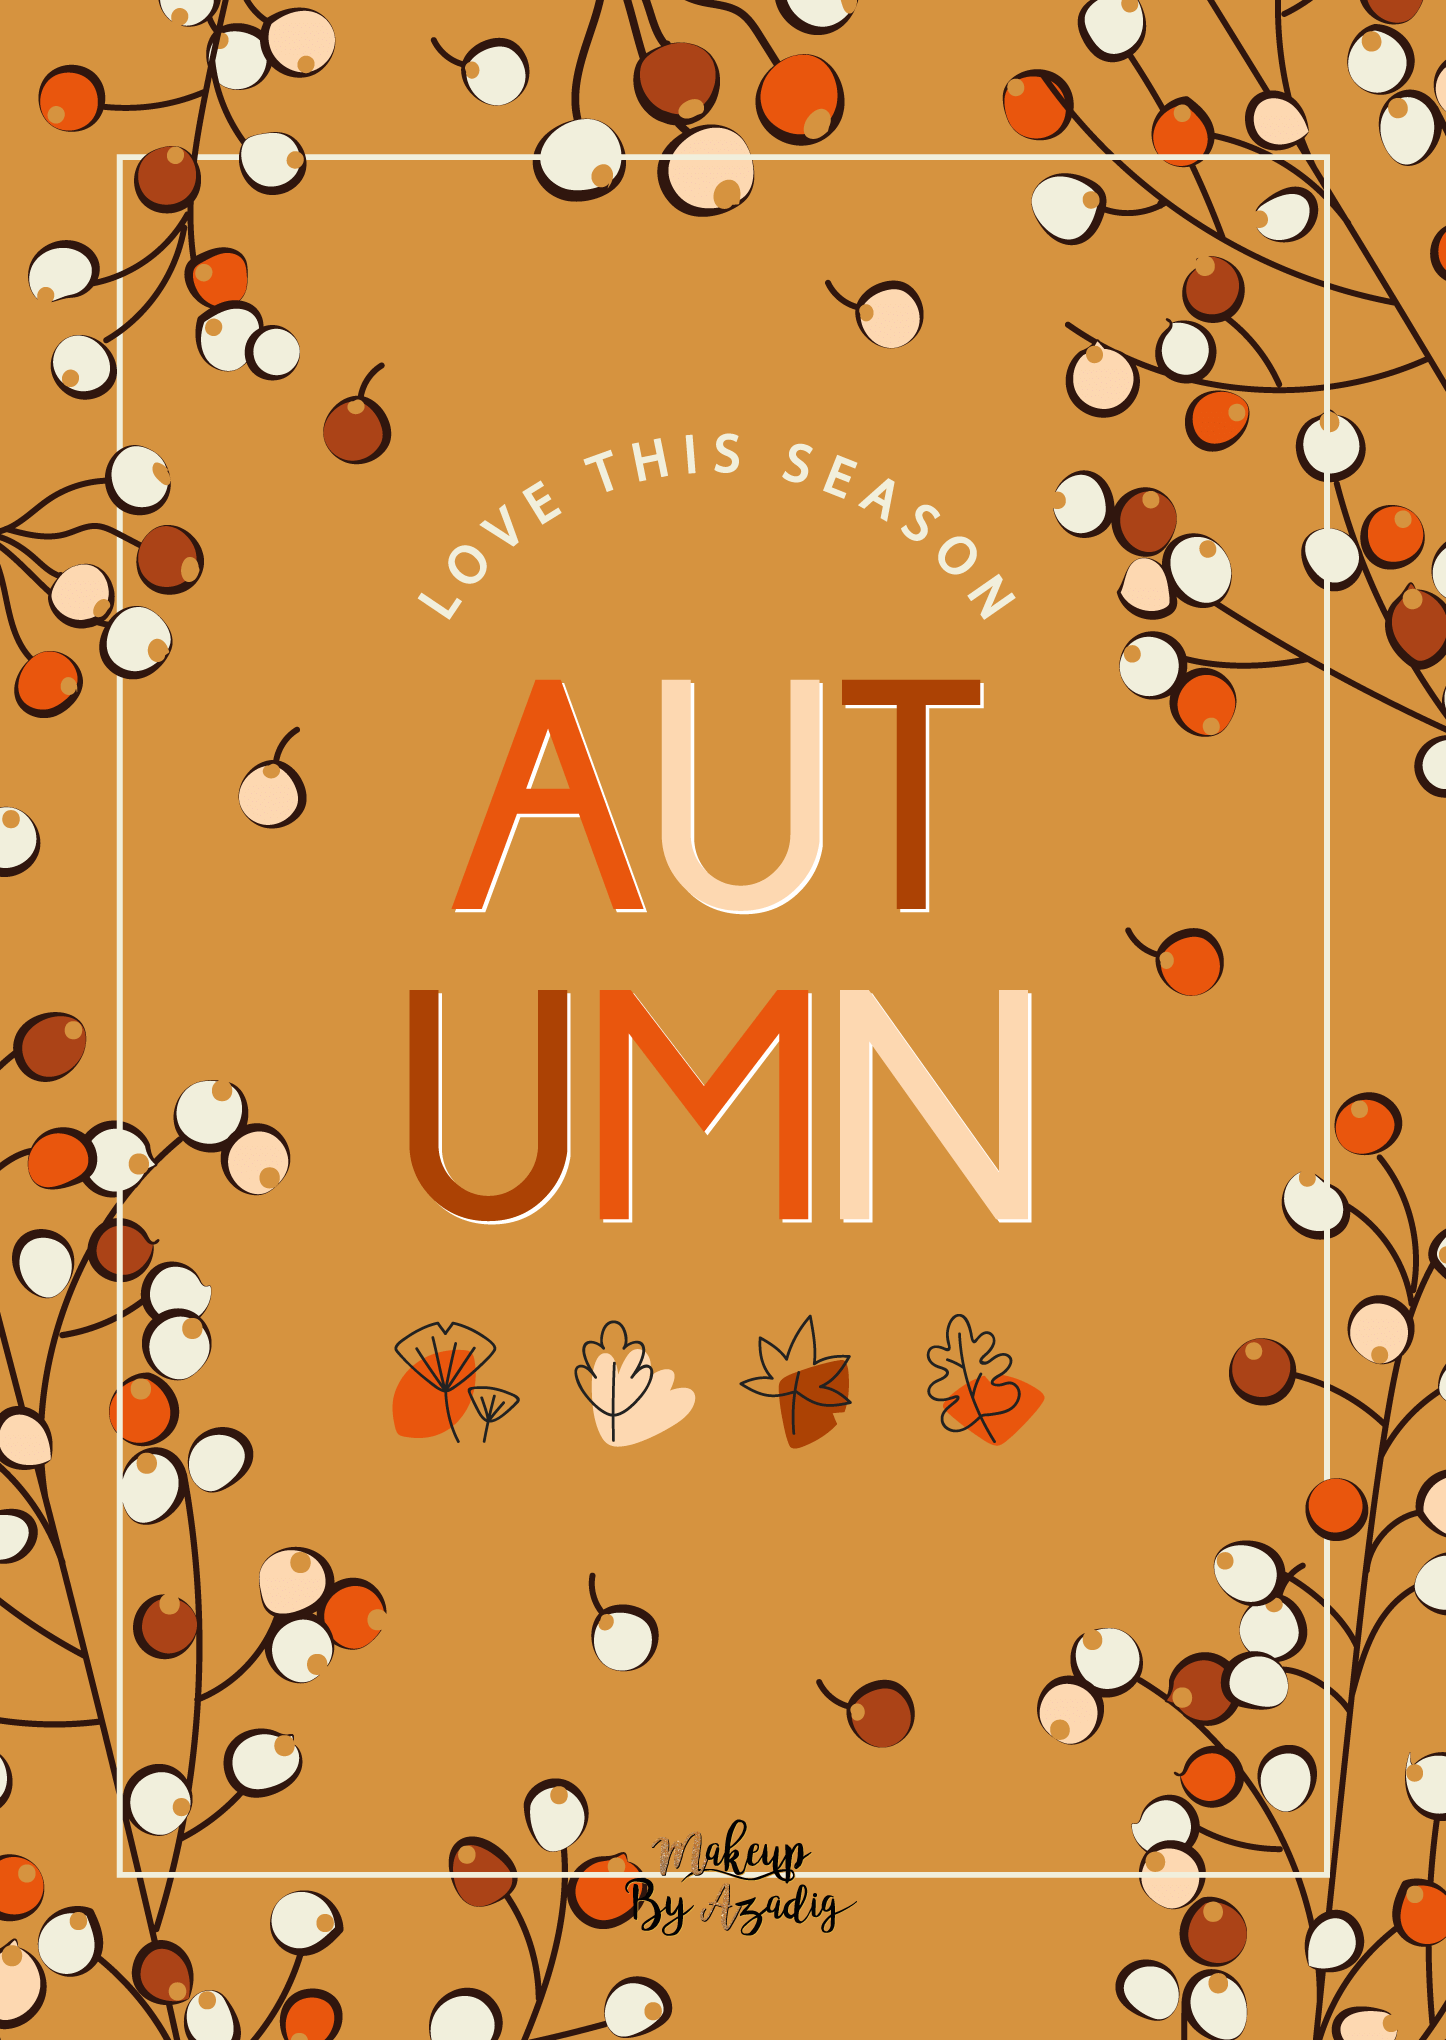 fond-decran-wallpaper-automne-leaves-autumn-season-ipad-tablette-apple-makeupbyazadig-tendance